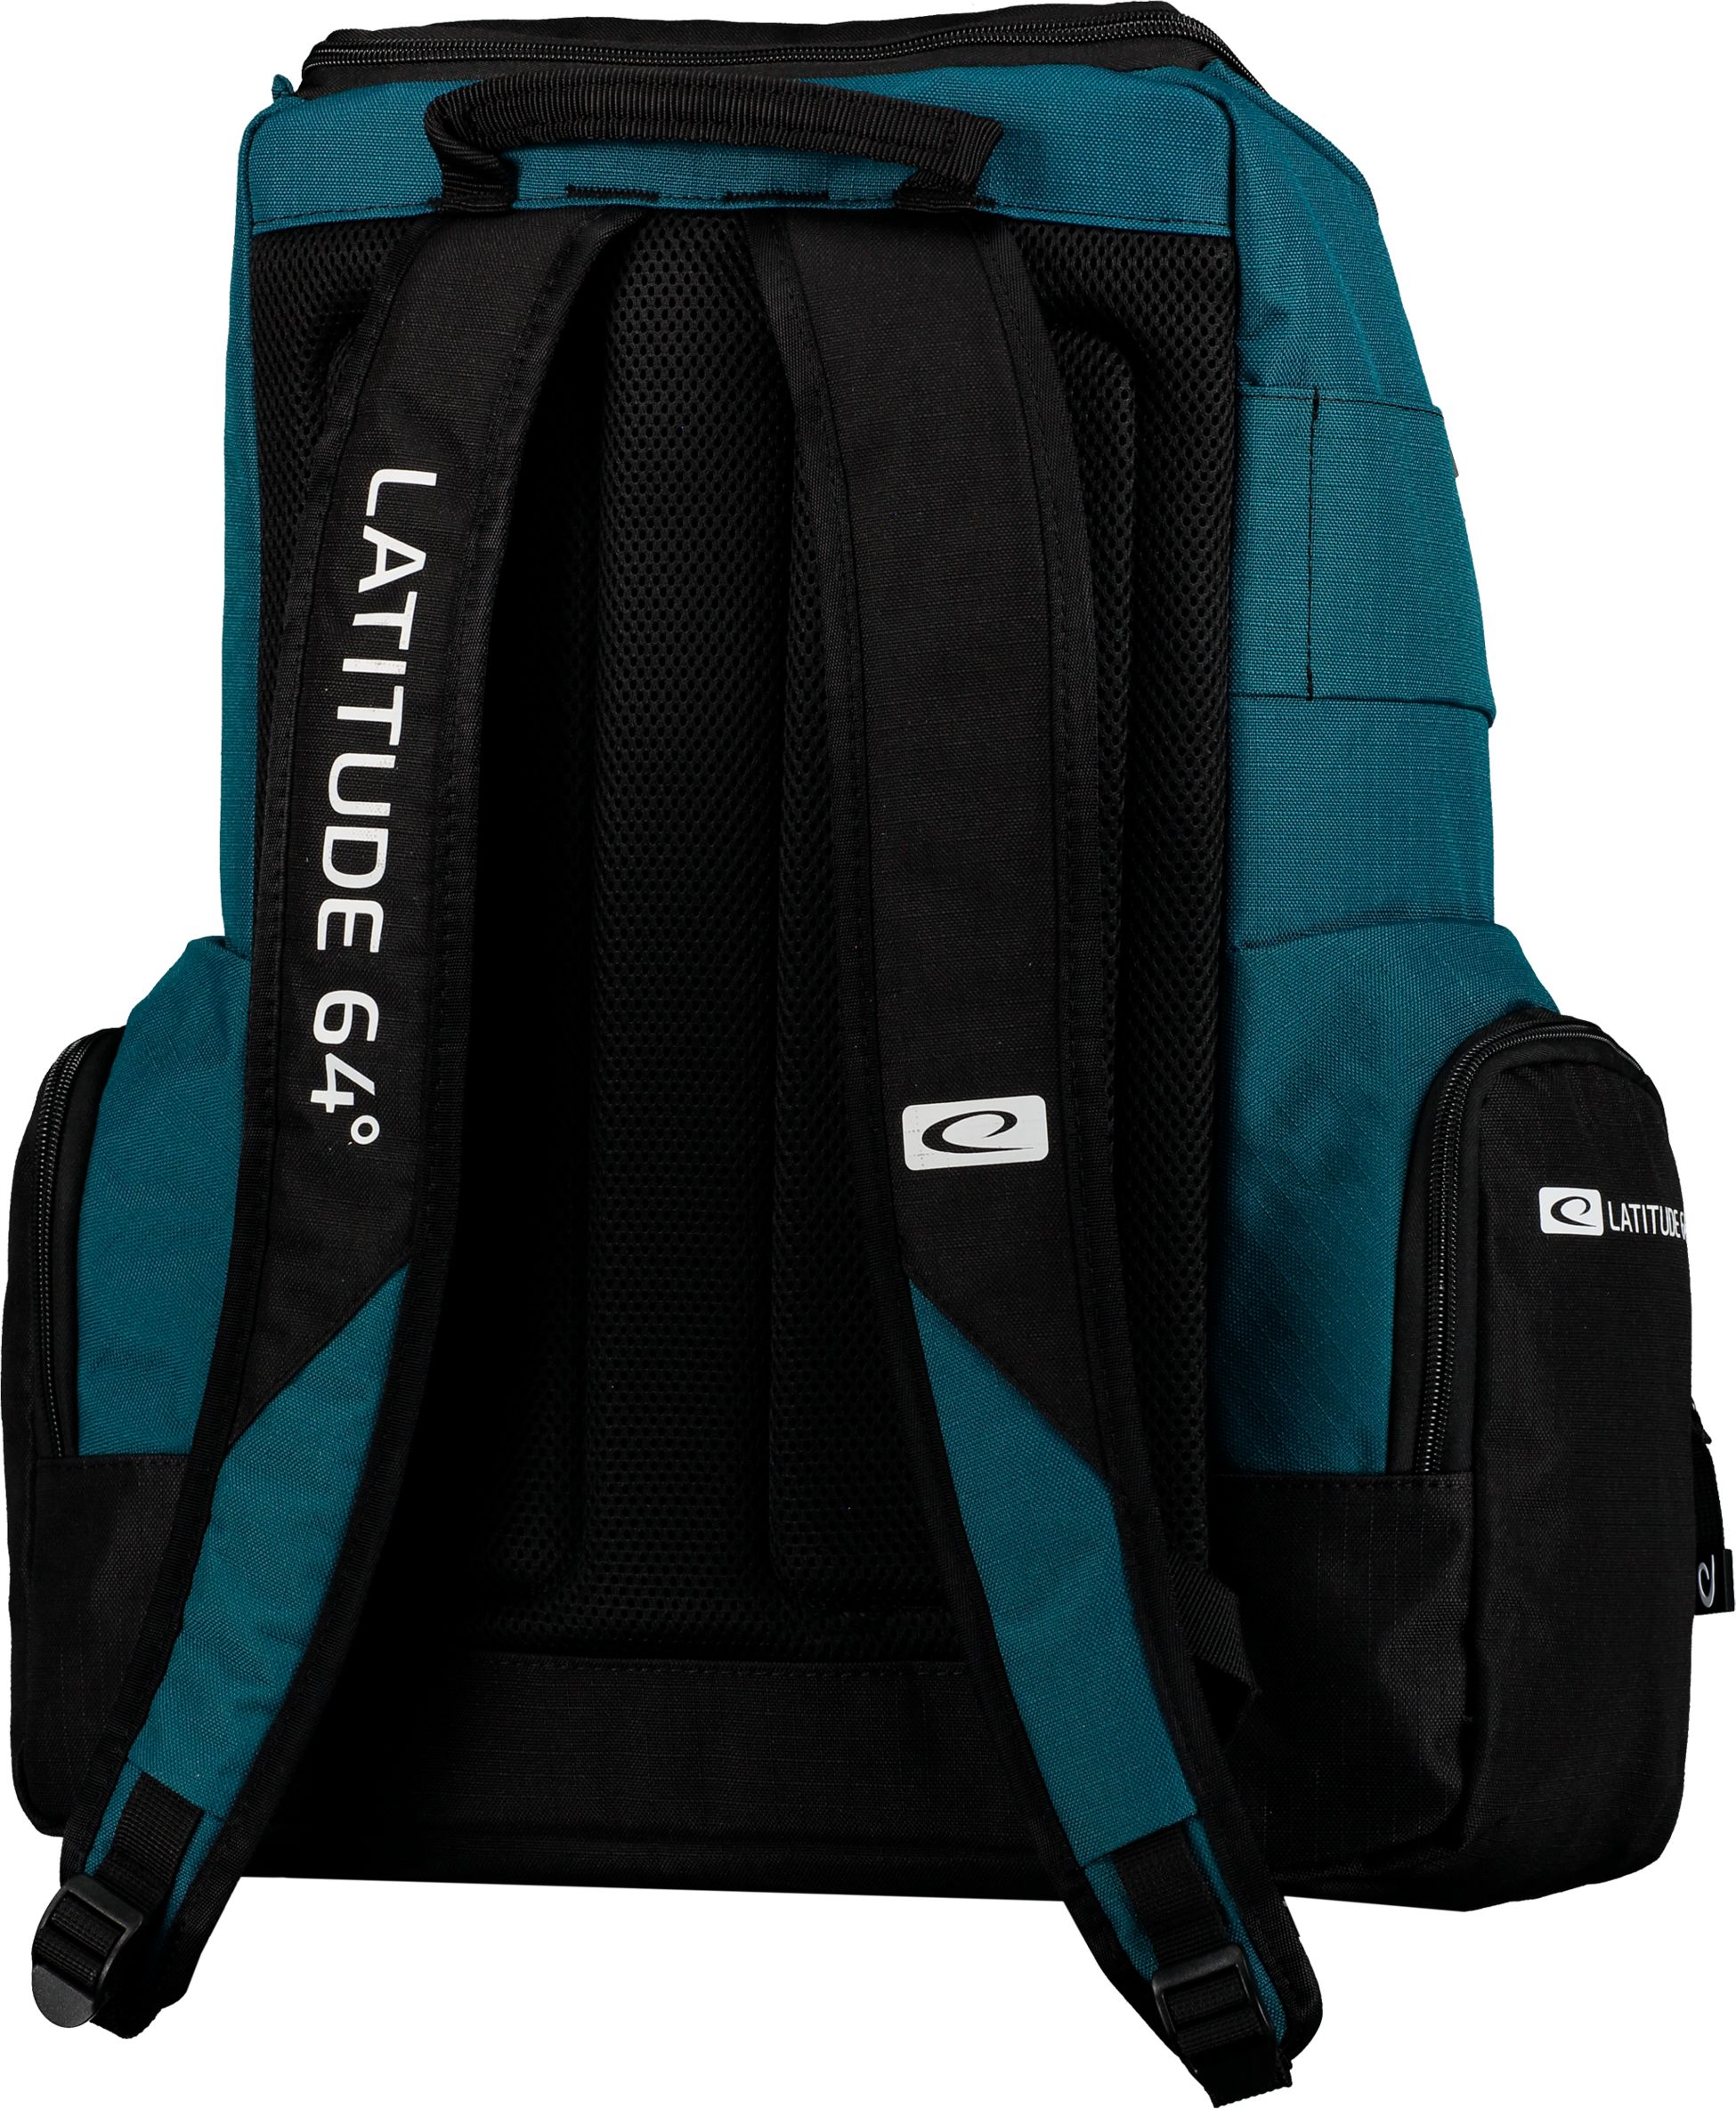 LATITUDE 64, Core Backpack Flyway Blue